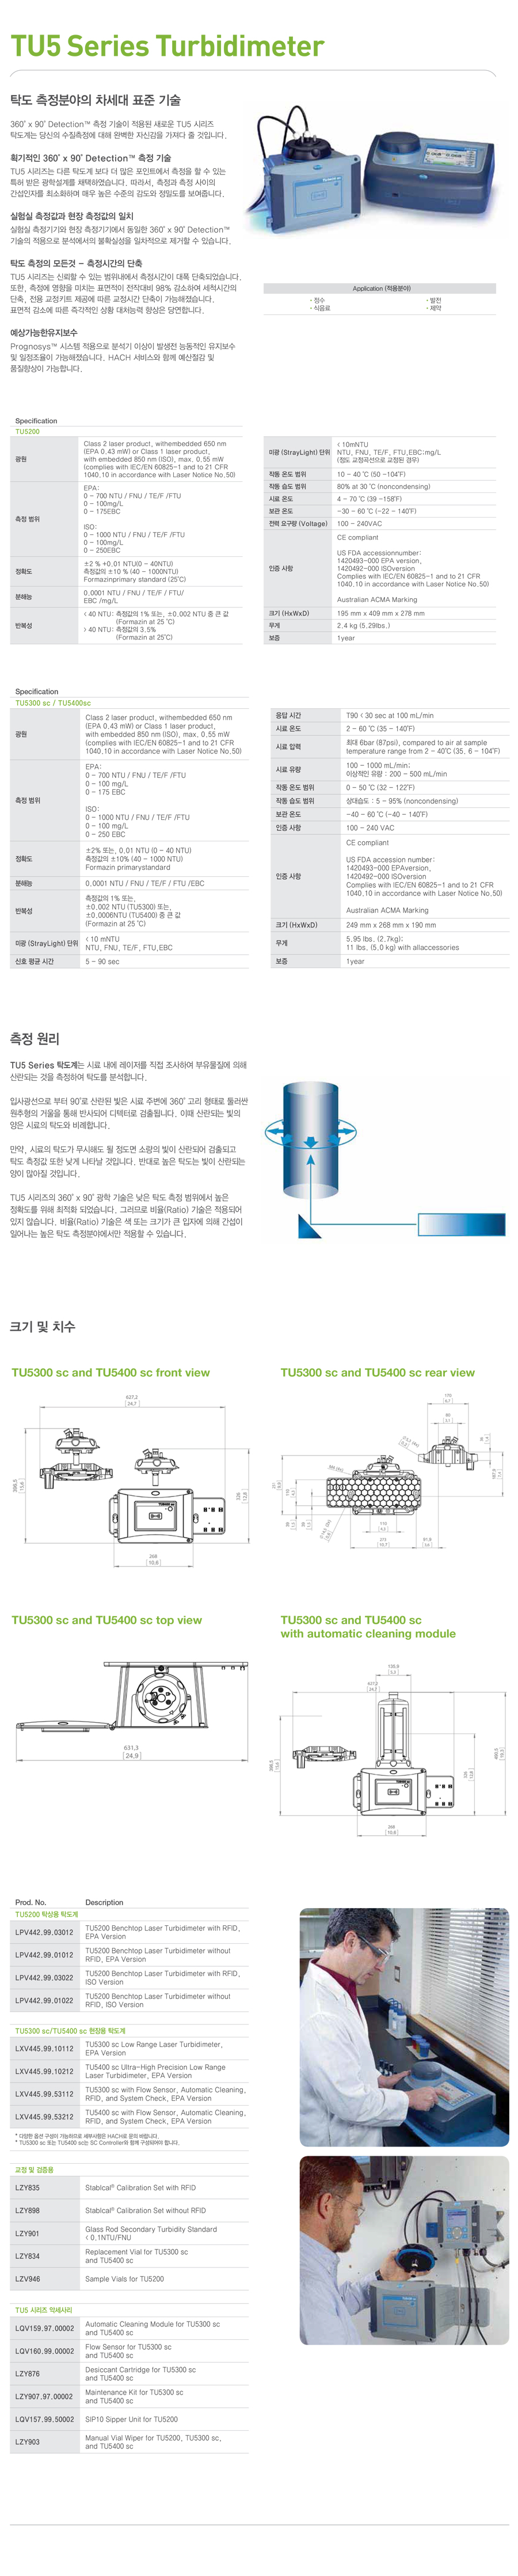 02_TU5_Series_Turbidimeter_c.jpg